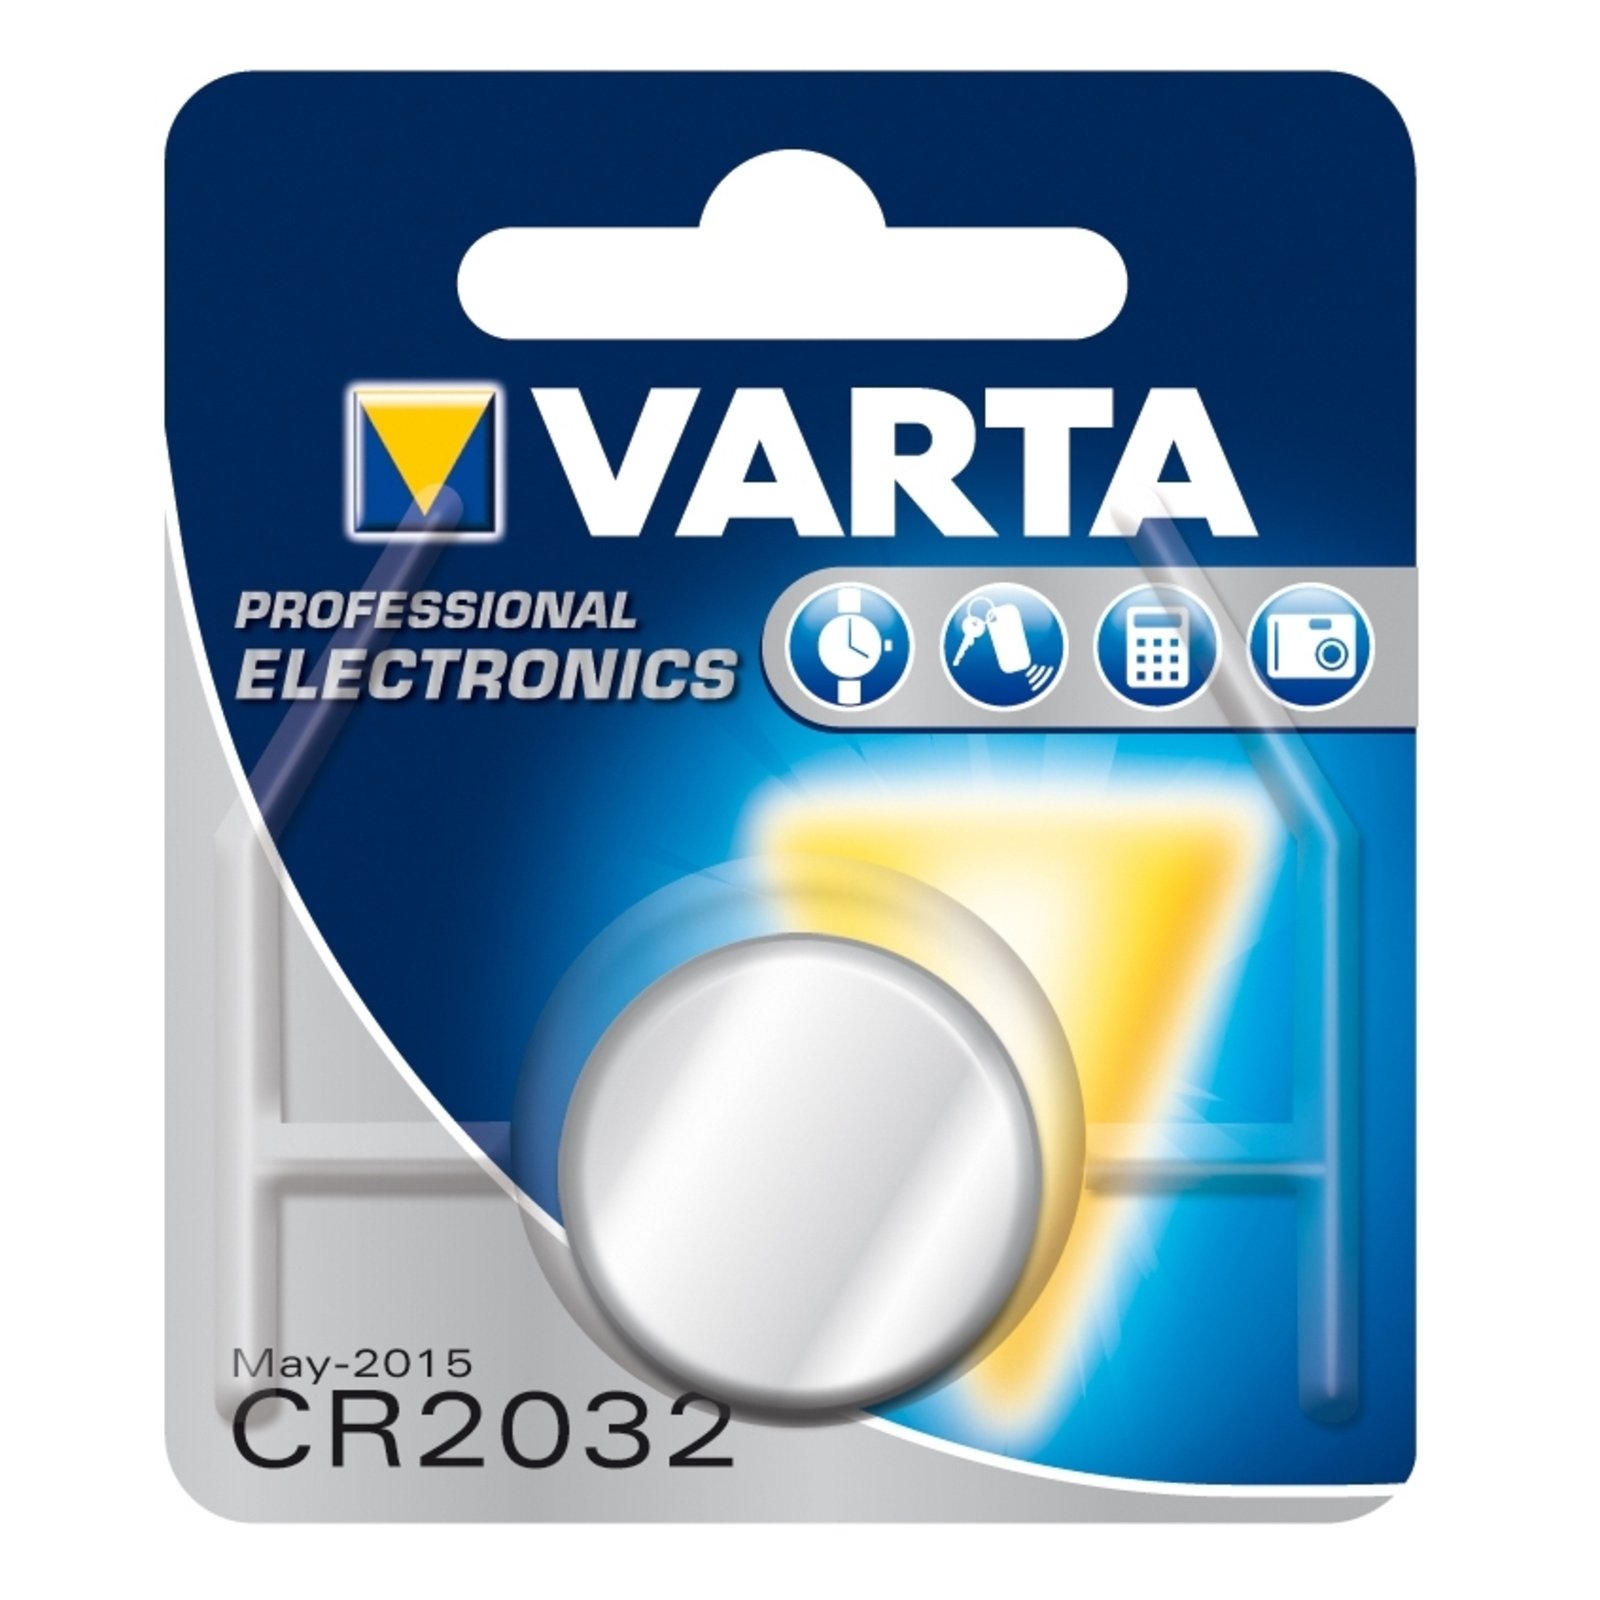 VARTA Lithium Knopfzelle CR2032 3V 220 mAh